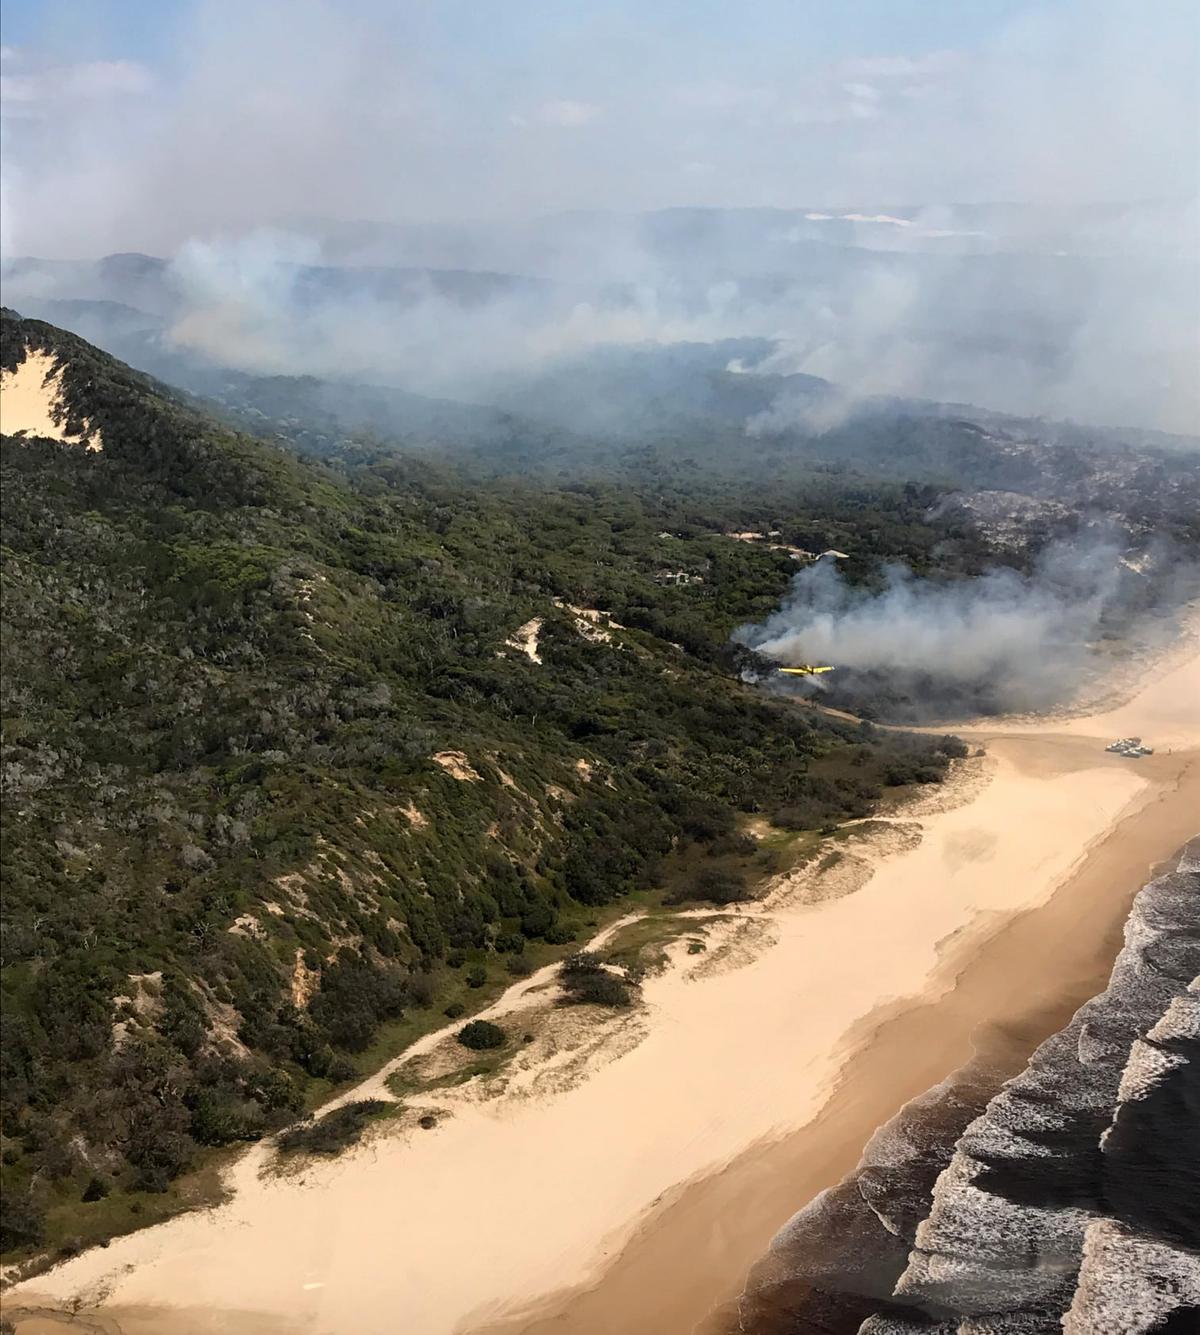 Fraser Island Burns, Workers Evacuated